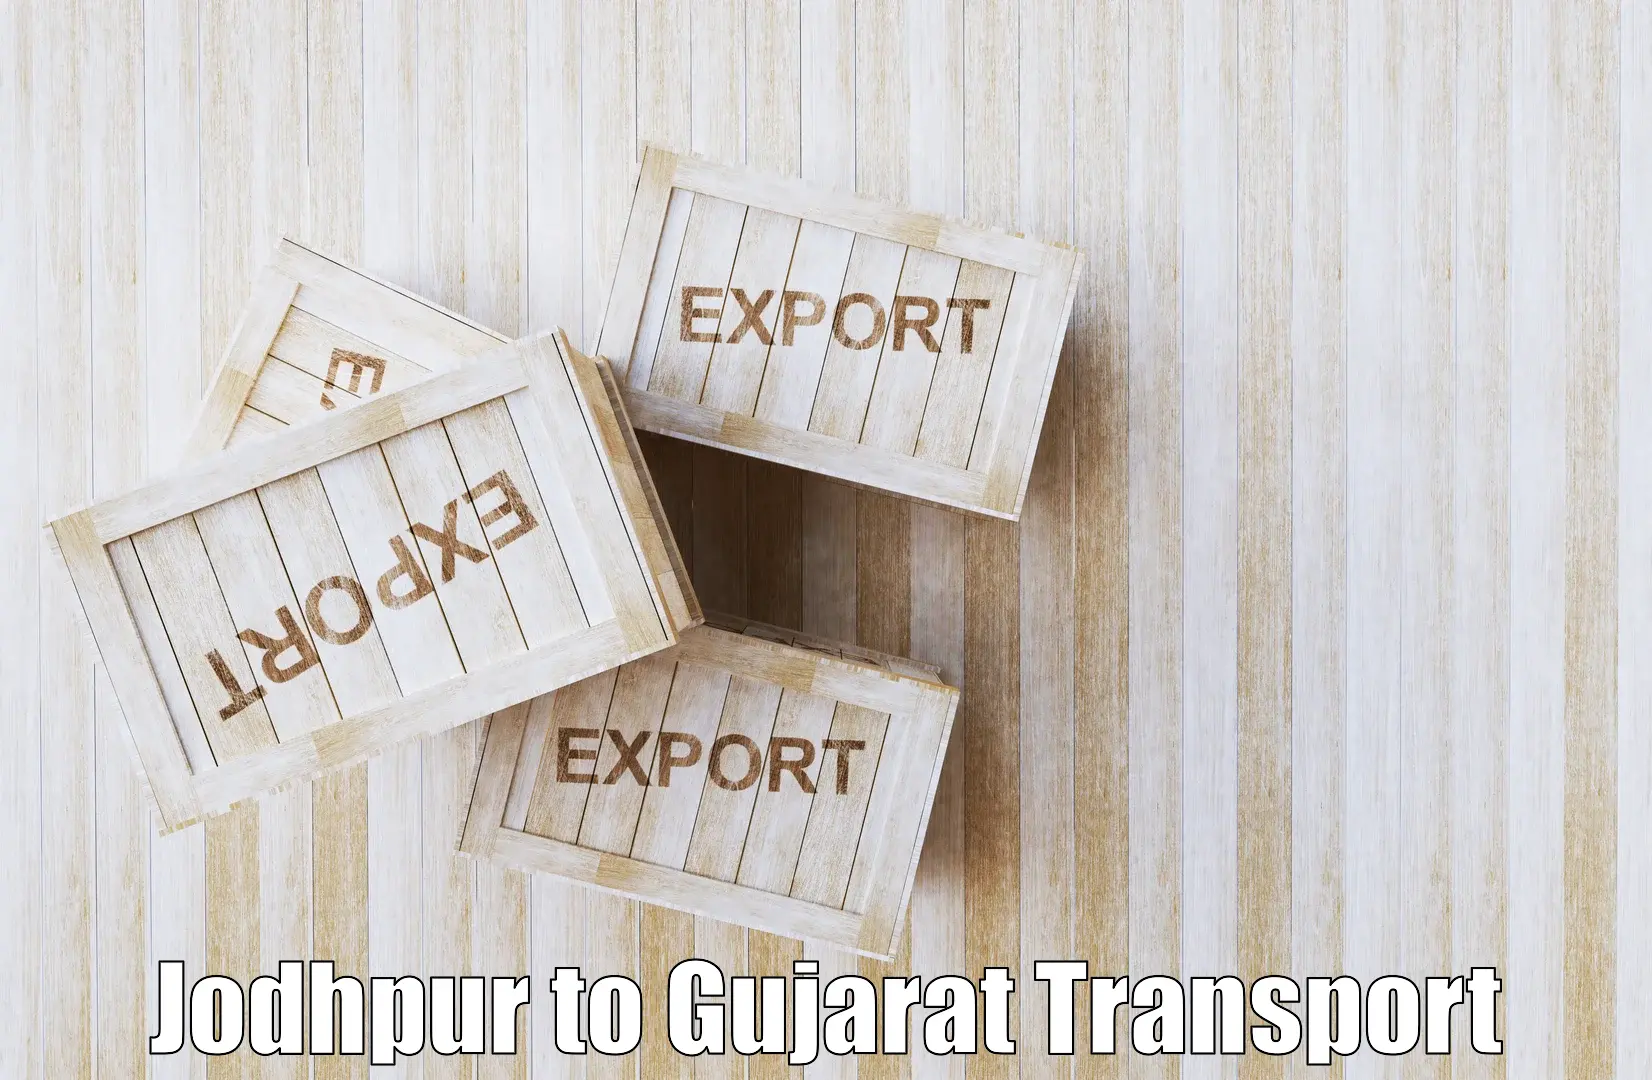 All India transport service Jodhpur to GIDC